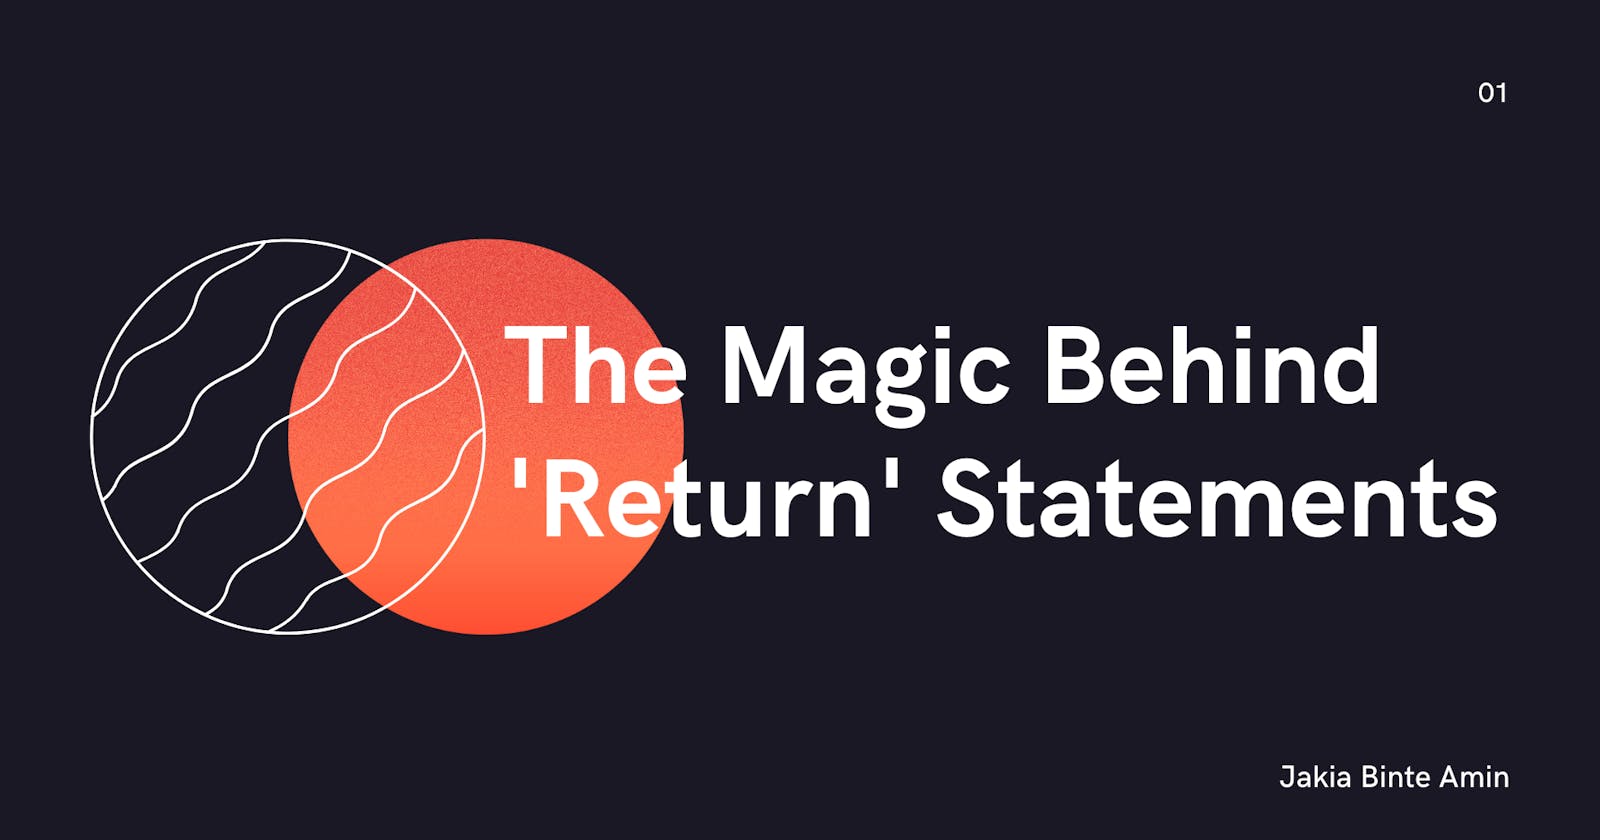 The Magic Behind 'Return' Statements